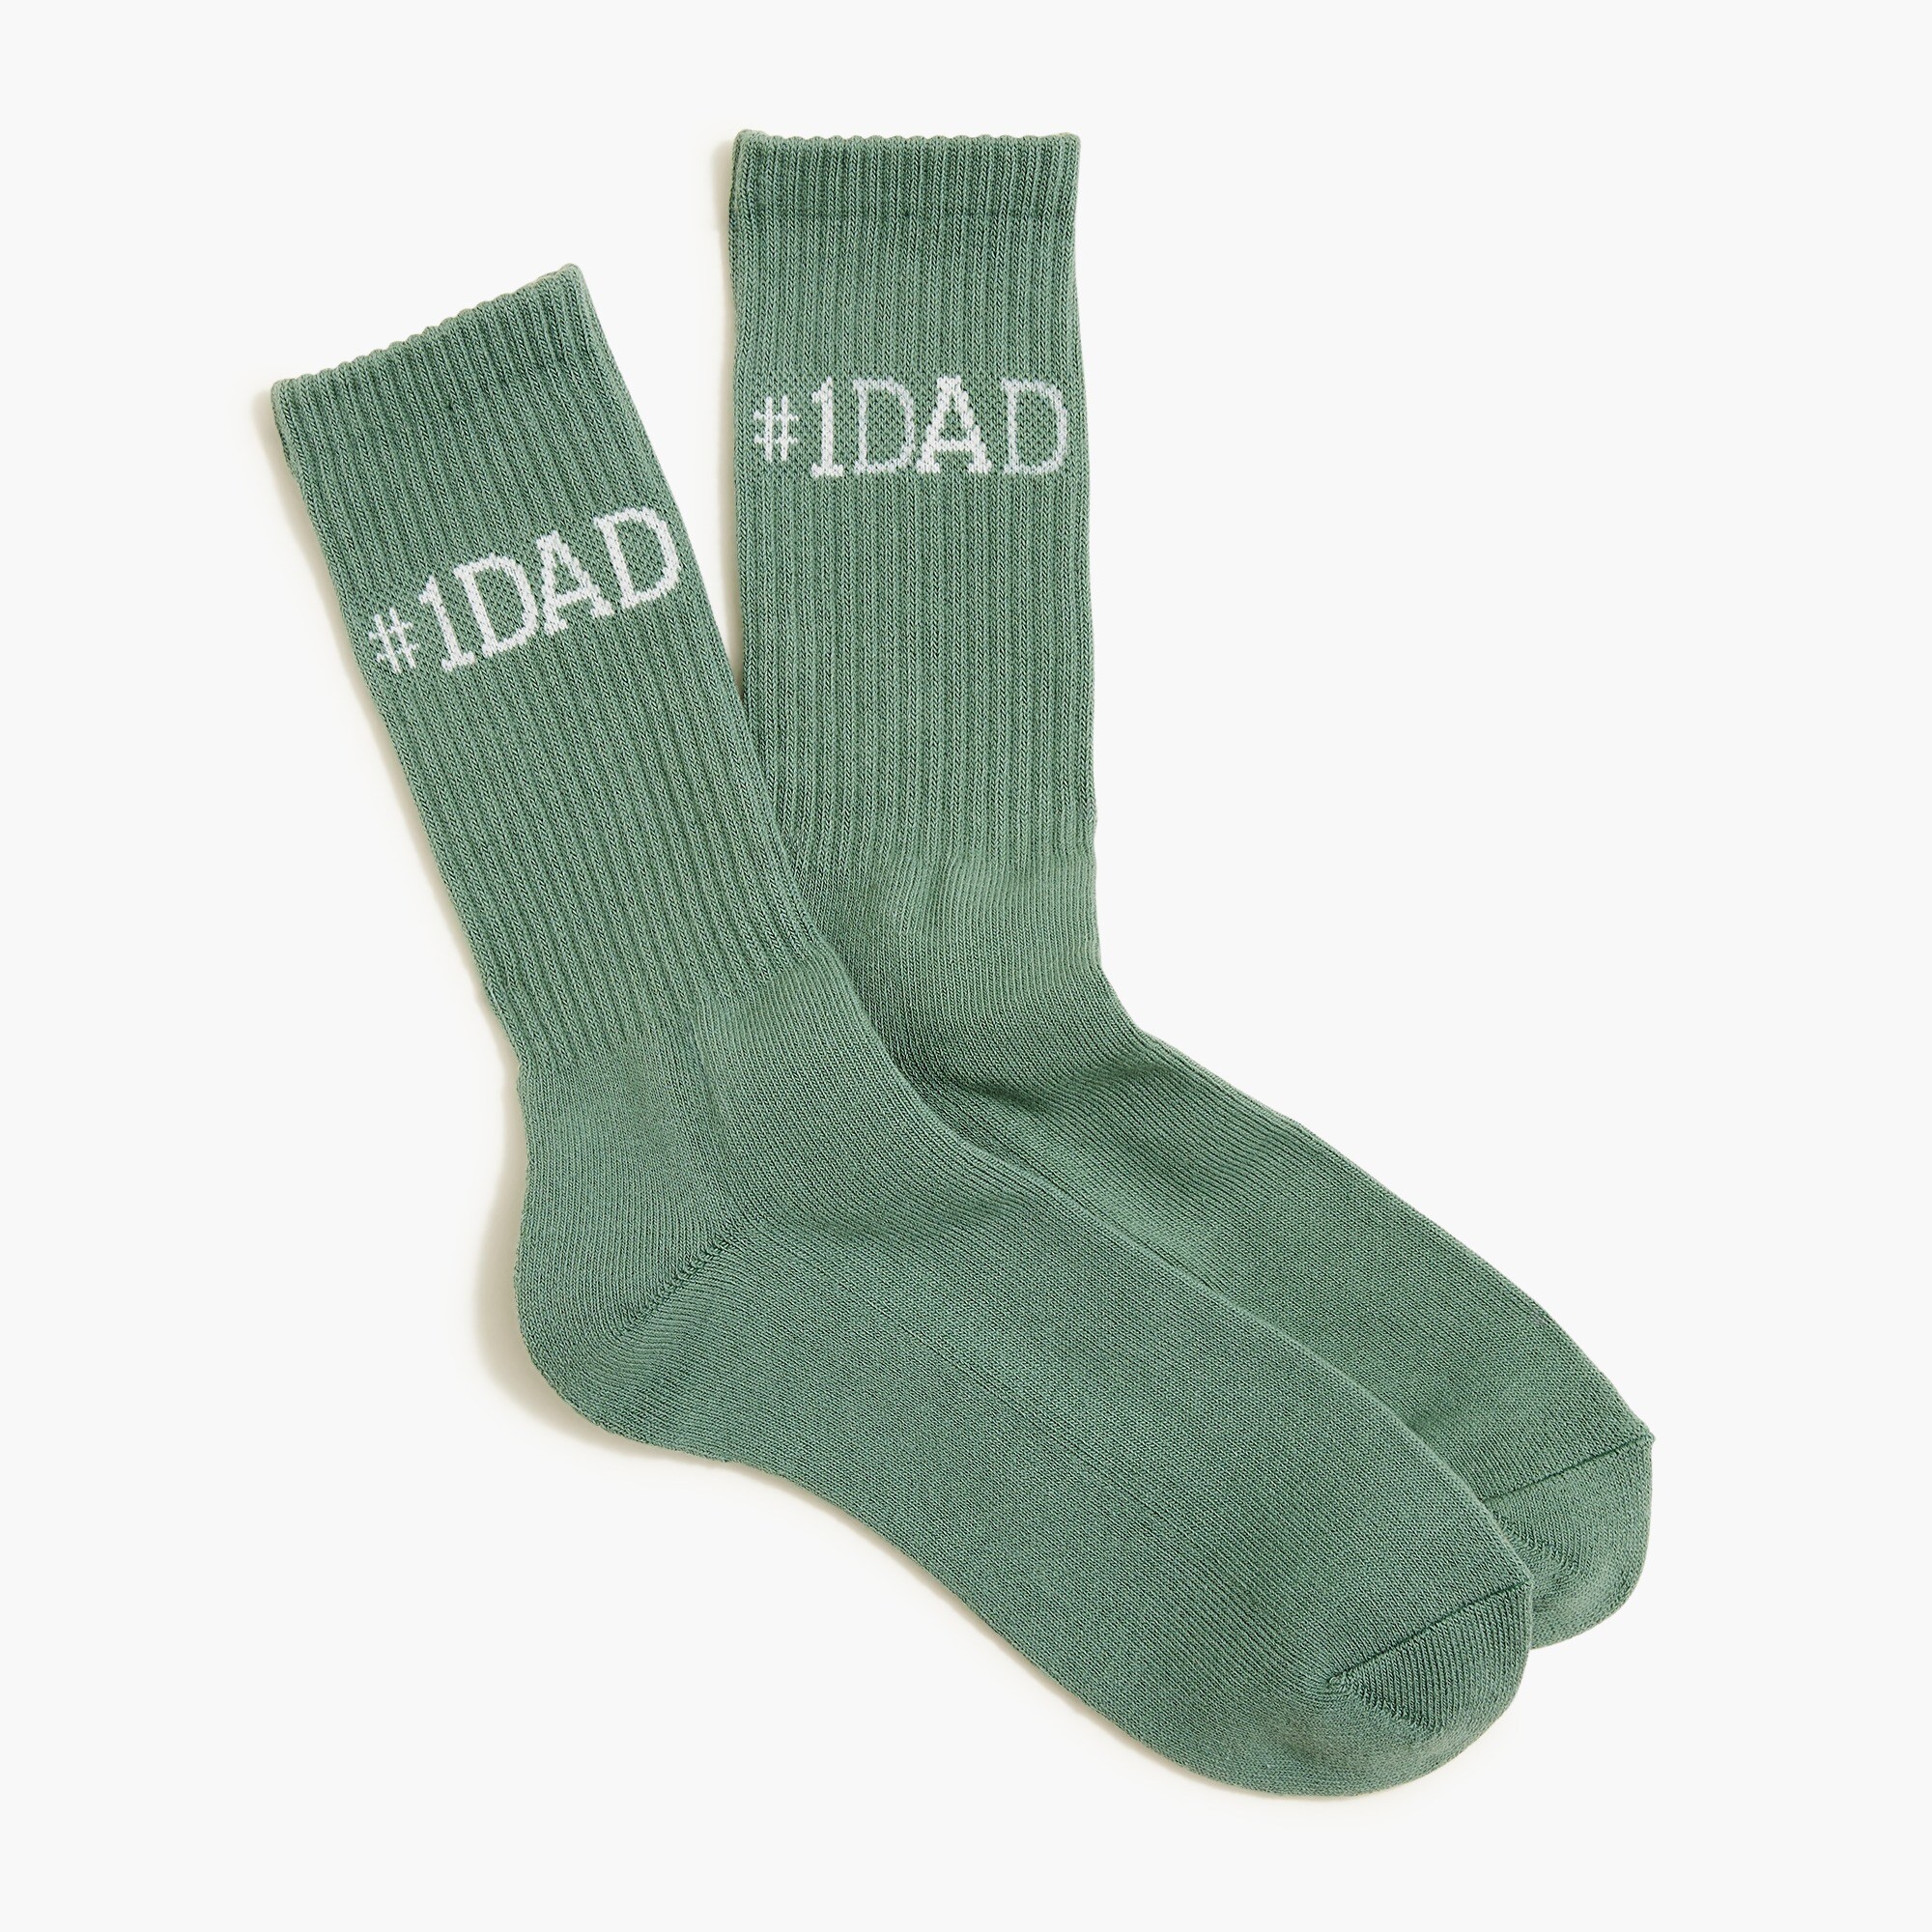  #1 Dad socks